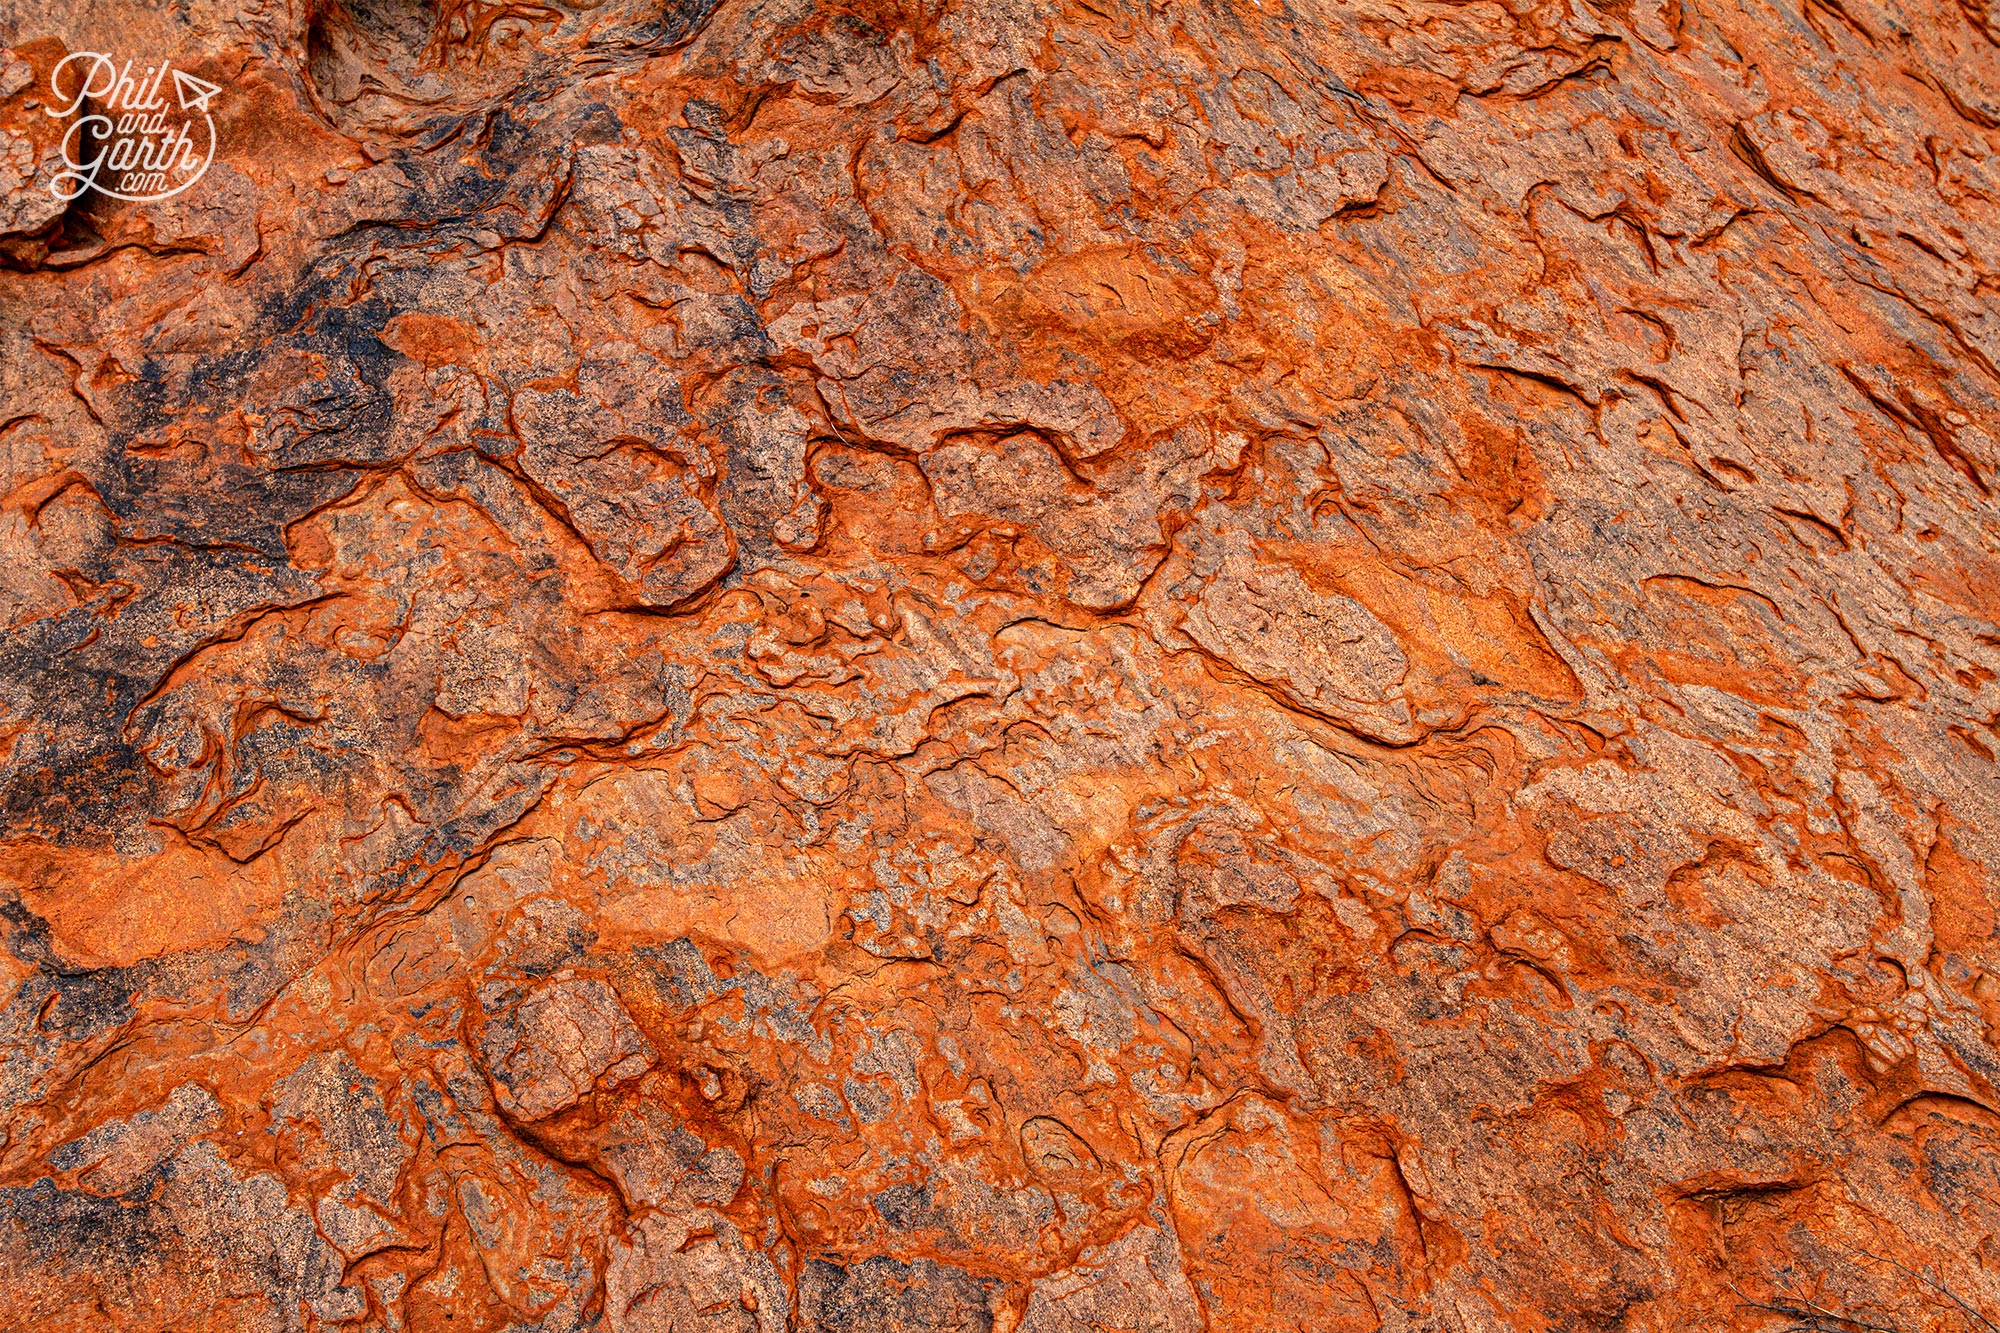 A close up of Uluru's rough surface texture